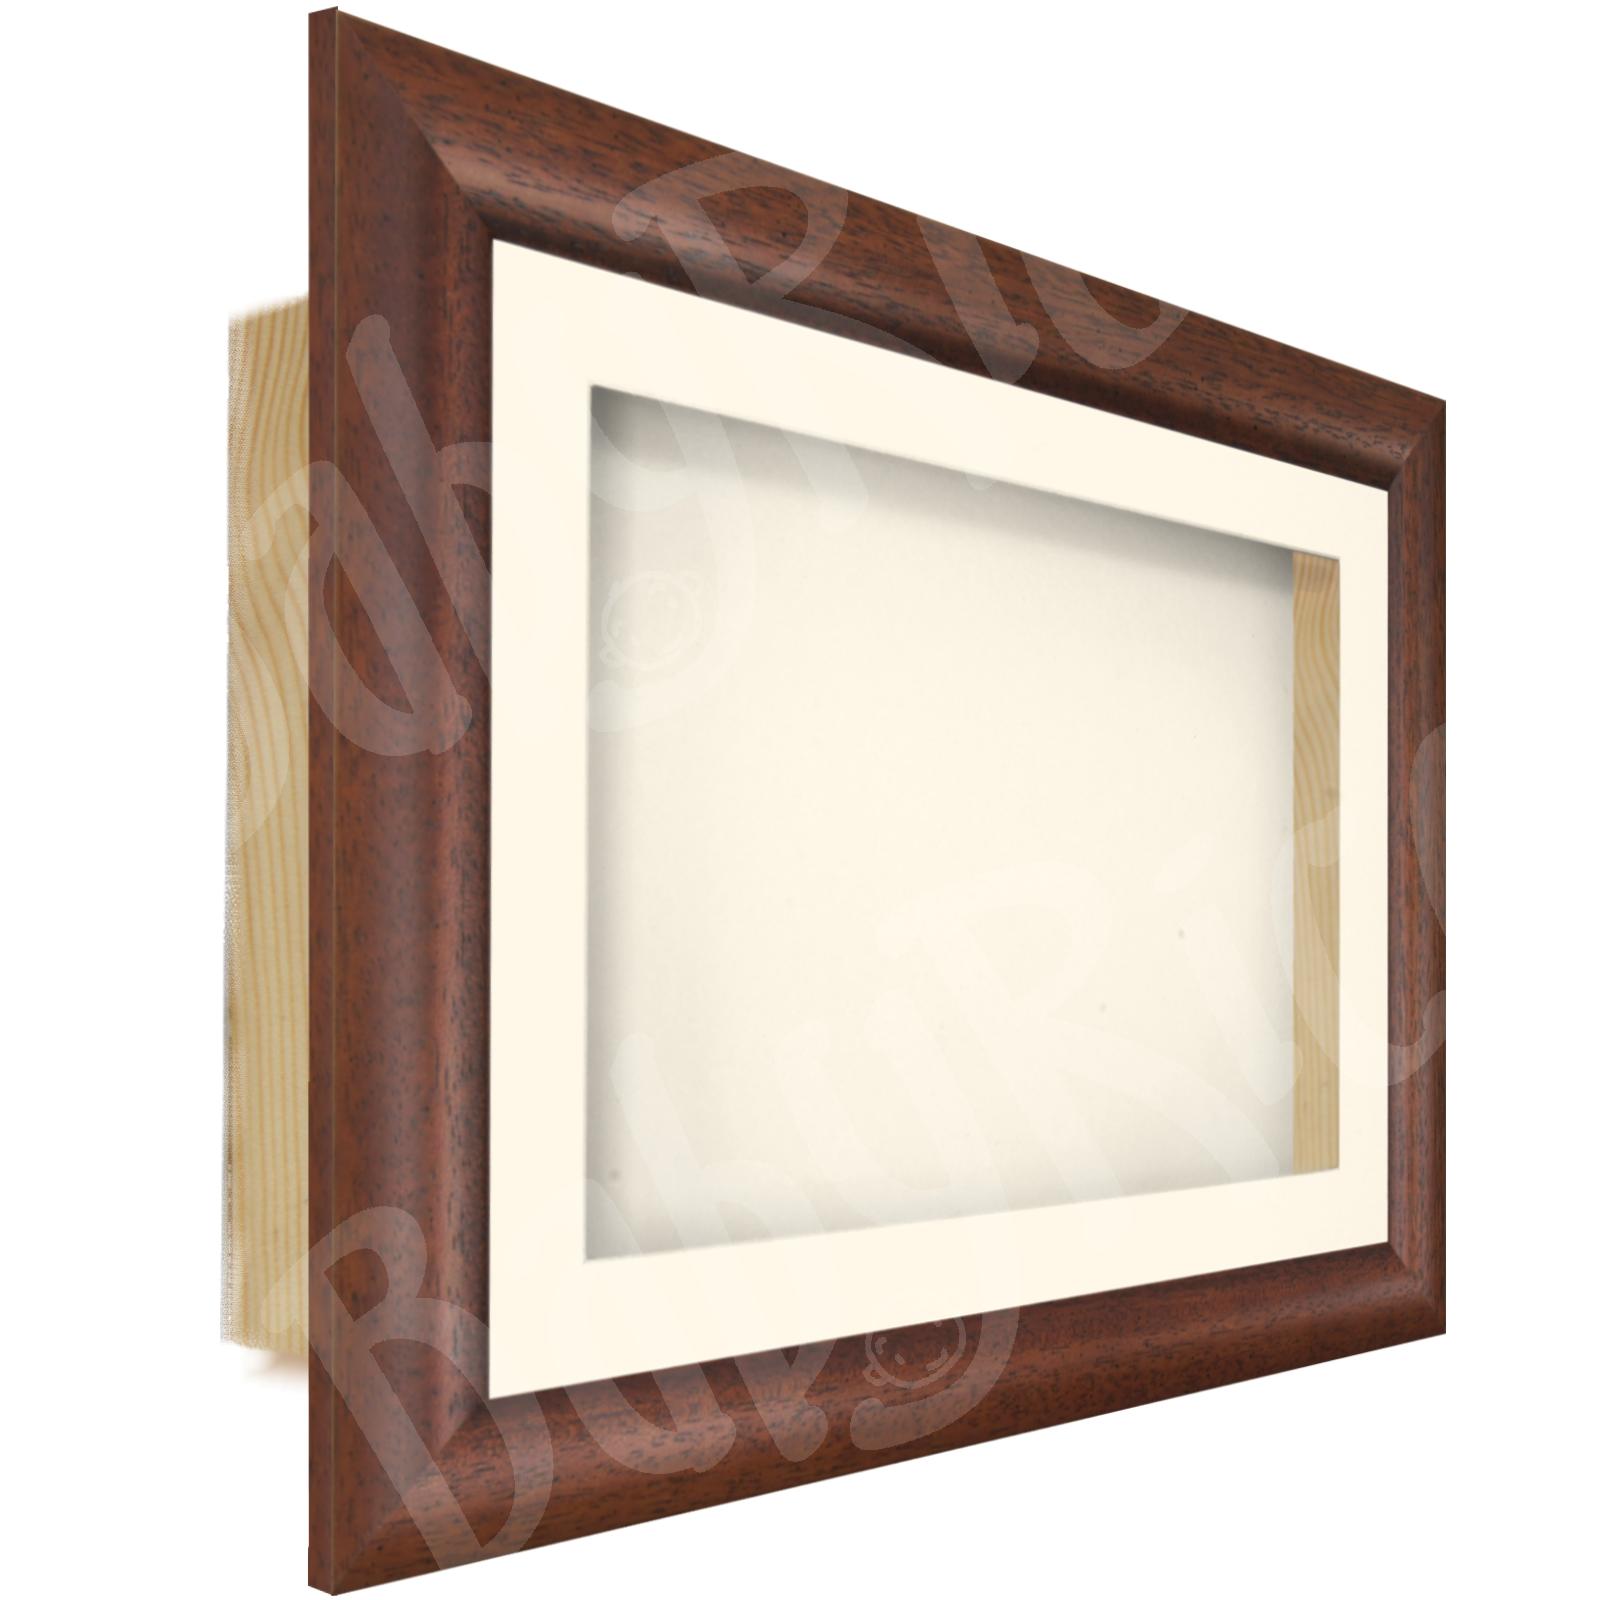 Walnut Wooden Deep Box Display Frame